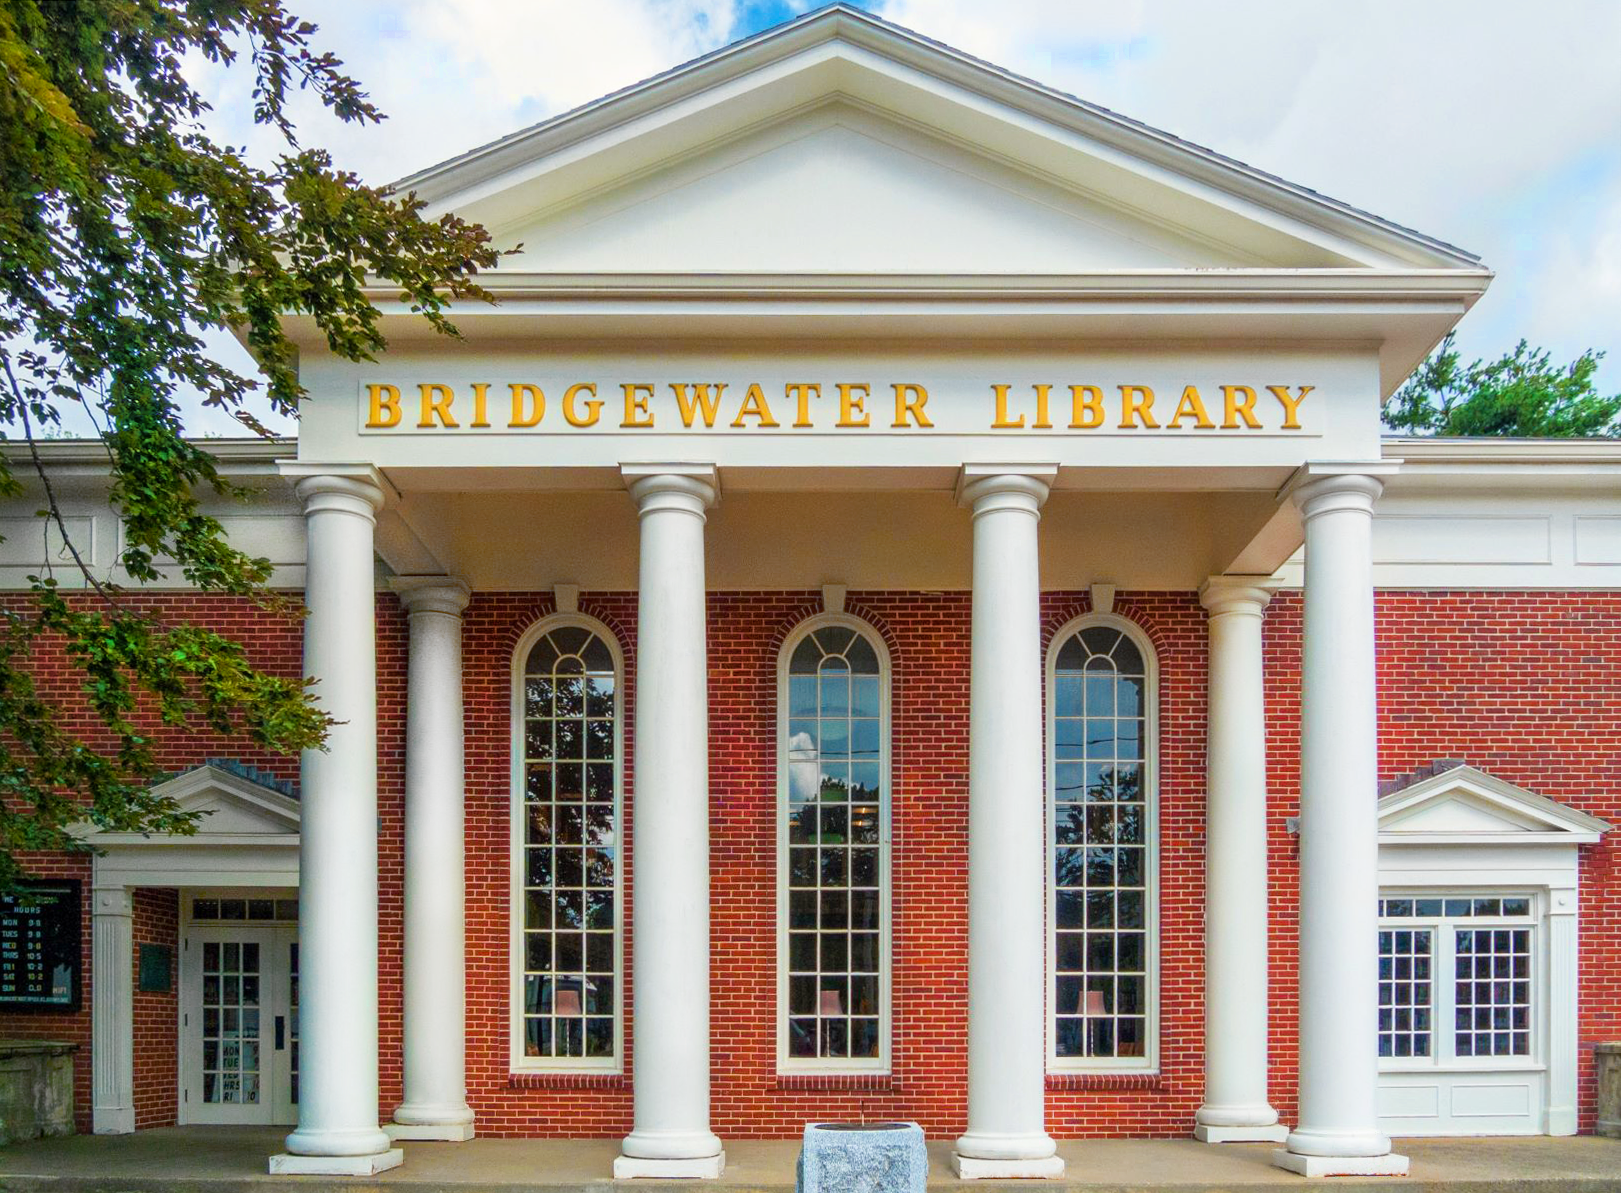 South Street facade of Bridgewater Public Library building